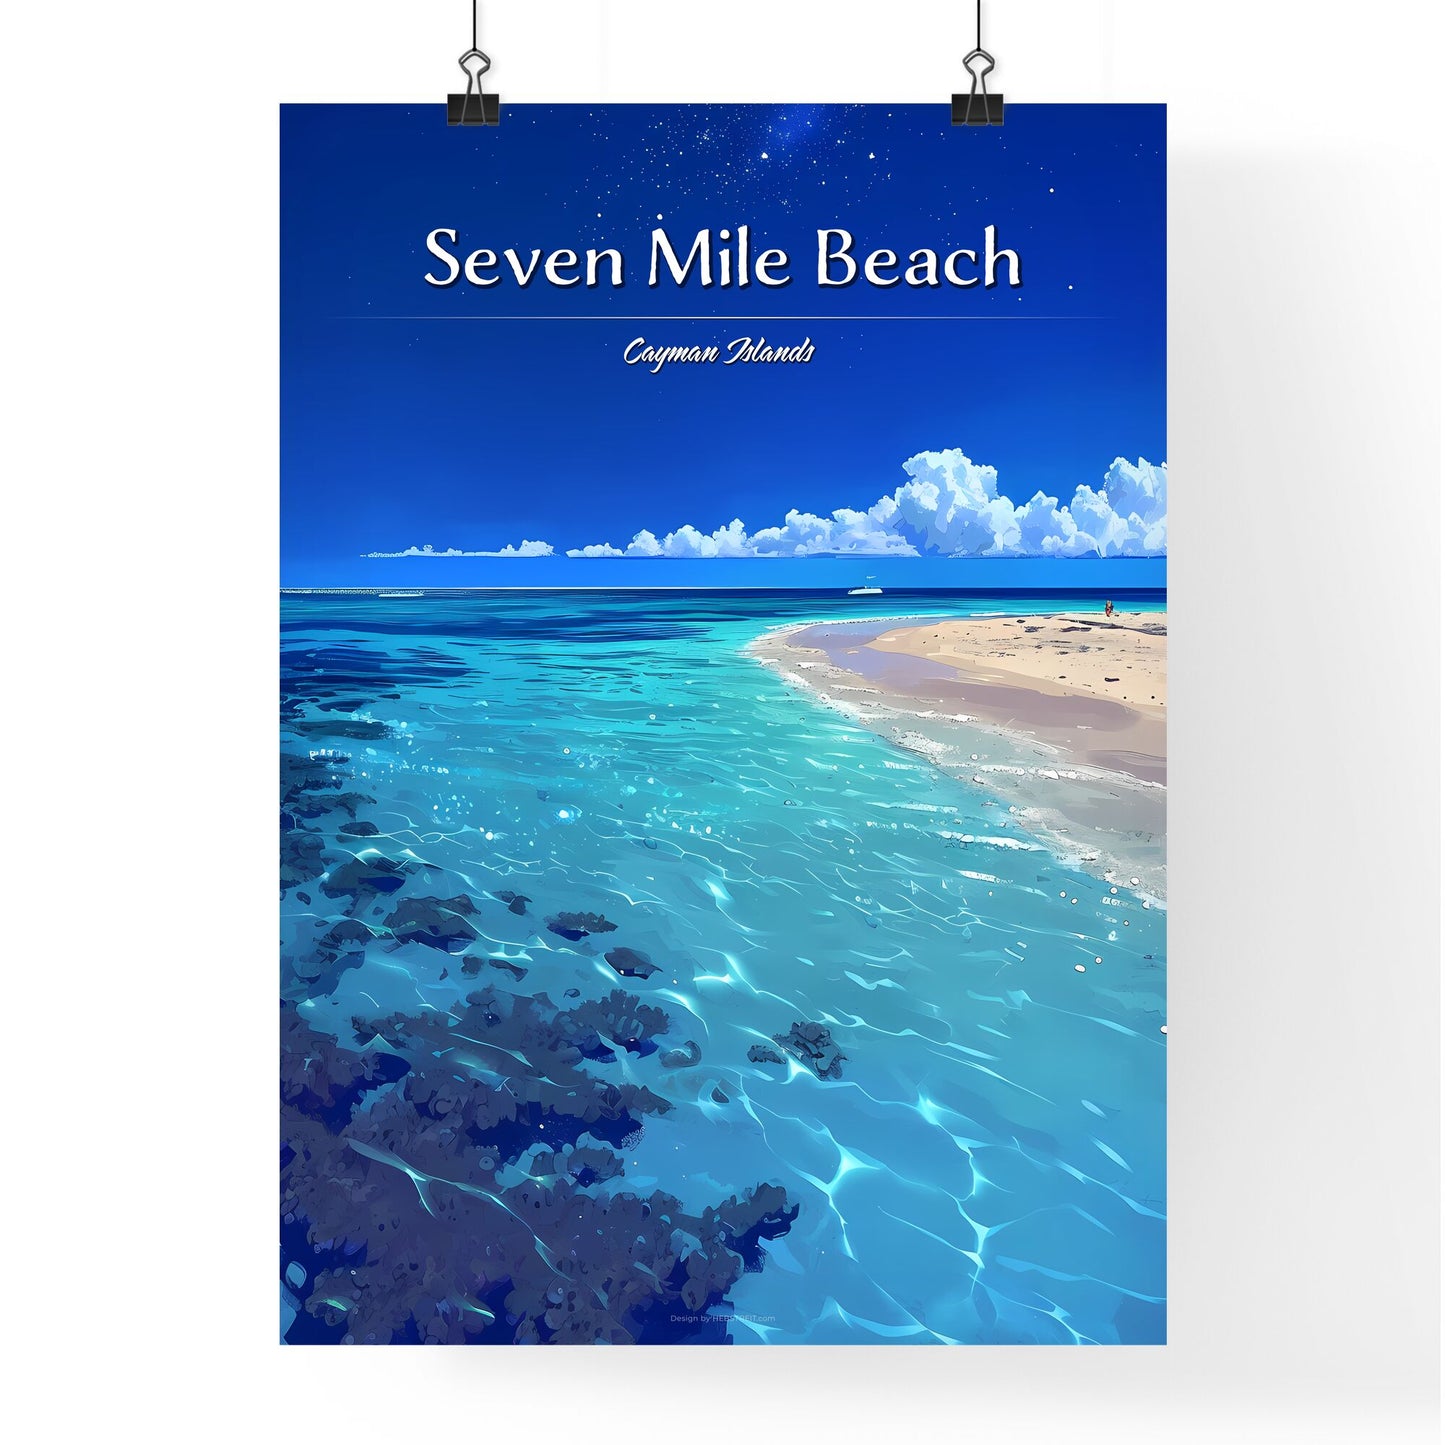 Seven Mile Beach, Cayman Islands - Art print of a beach with blue water and a sandy beach Default Title